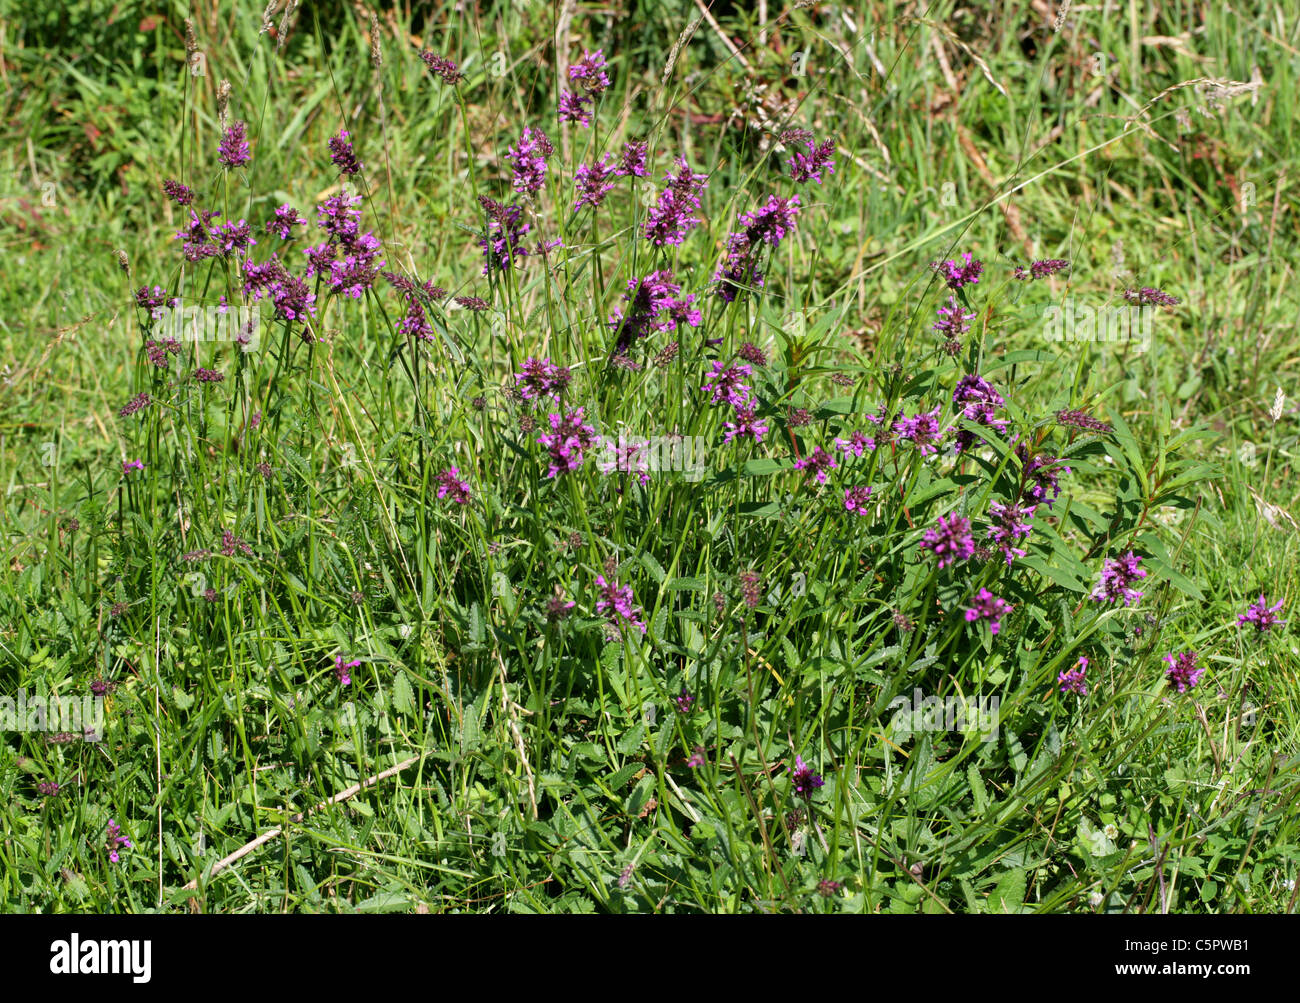 Purple Betony, Stachys officinalis (syn. Betonica officinalis), Lamiaceae. Stock Photo